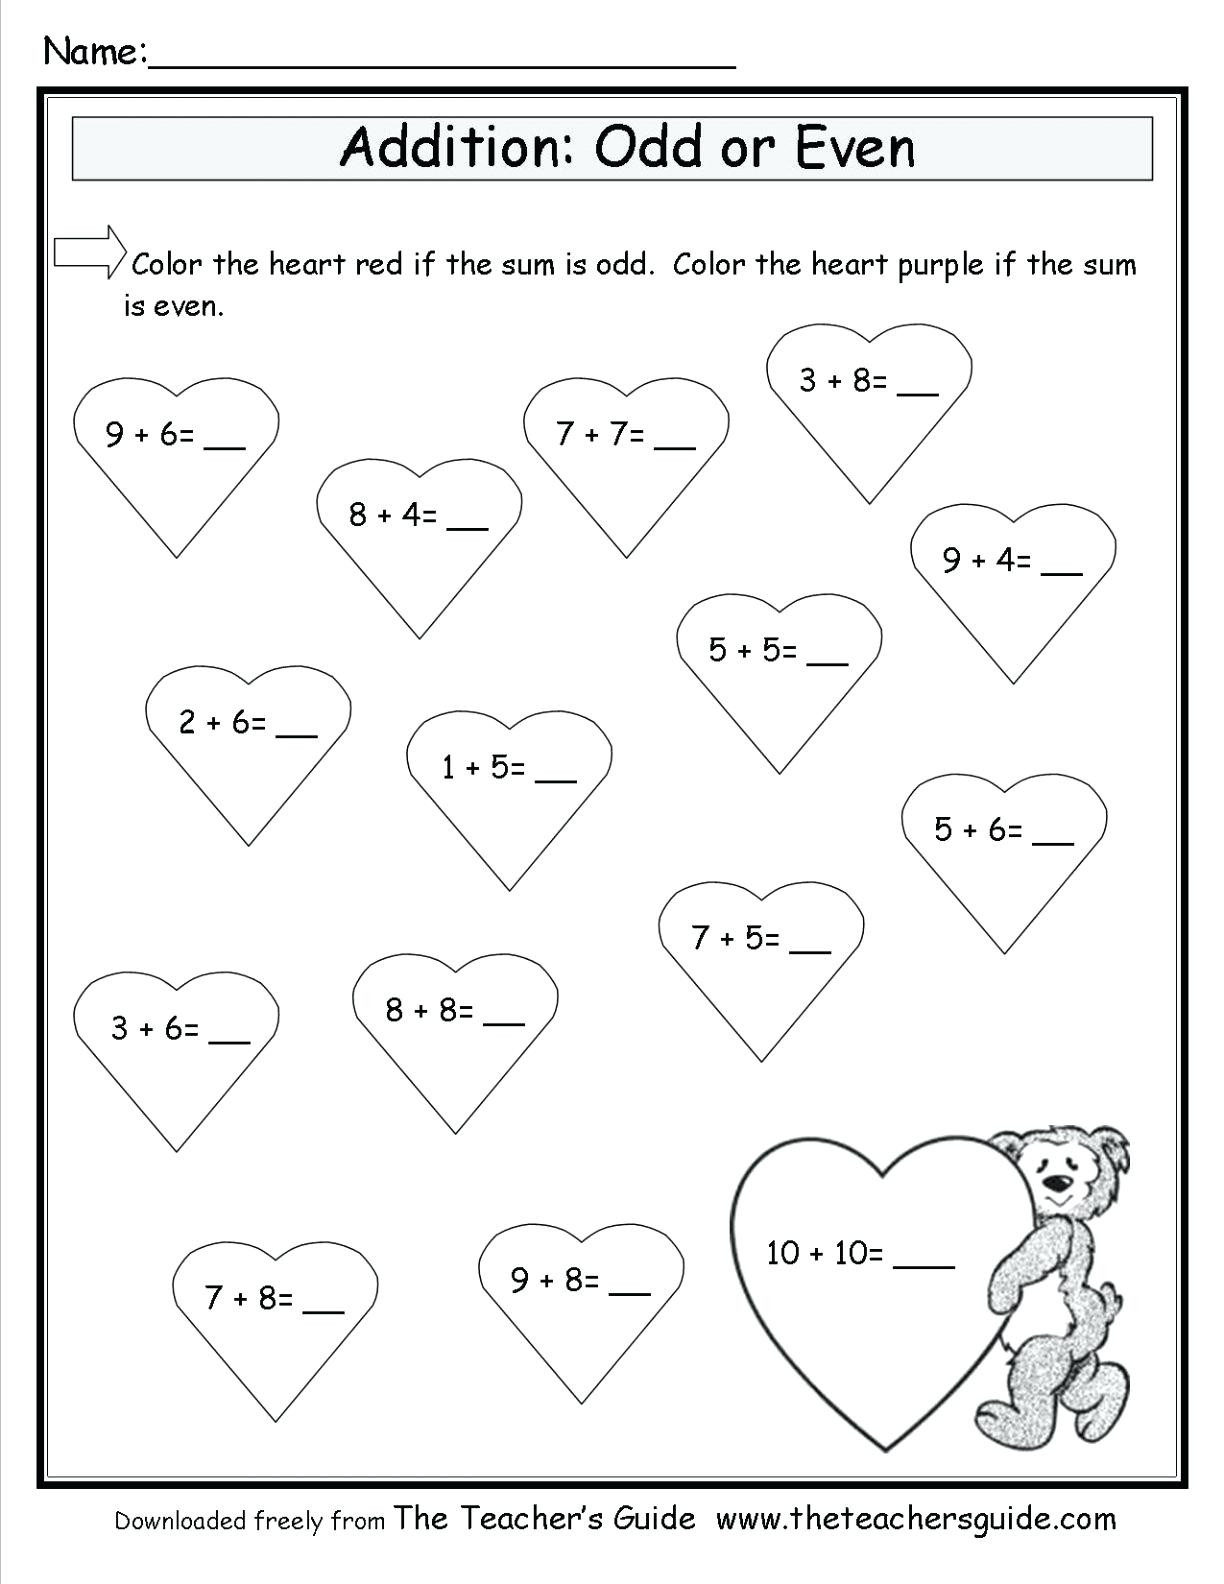 Free Math Worksheets Third Grade 3 Fractions and Decimals Adding Decimals 1 Digit